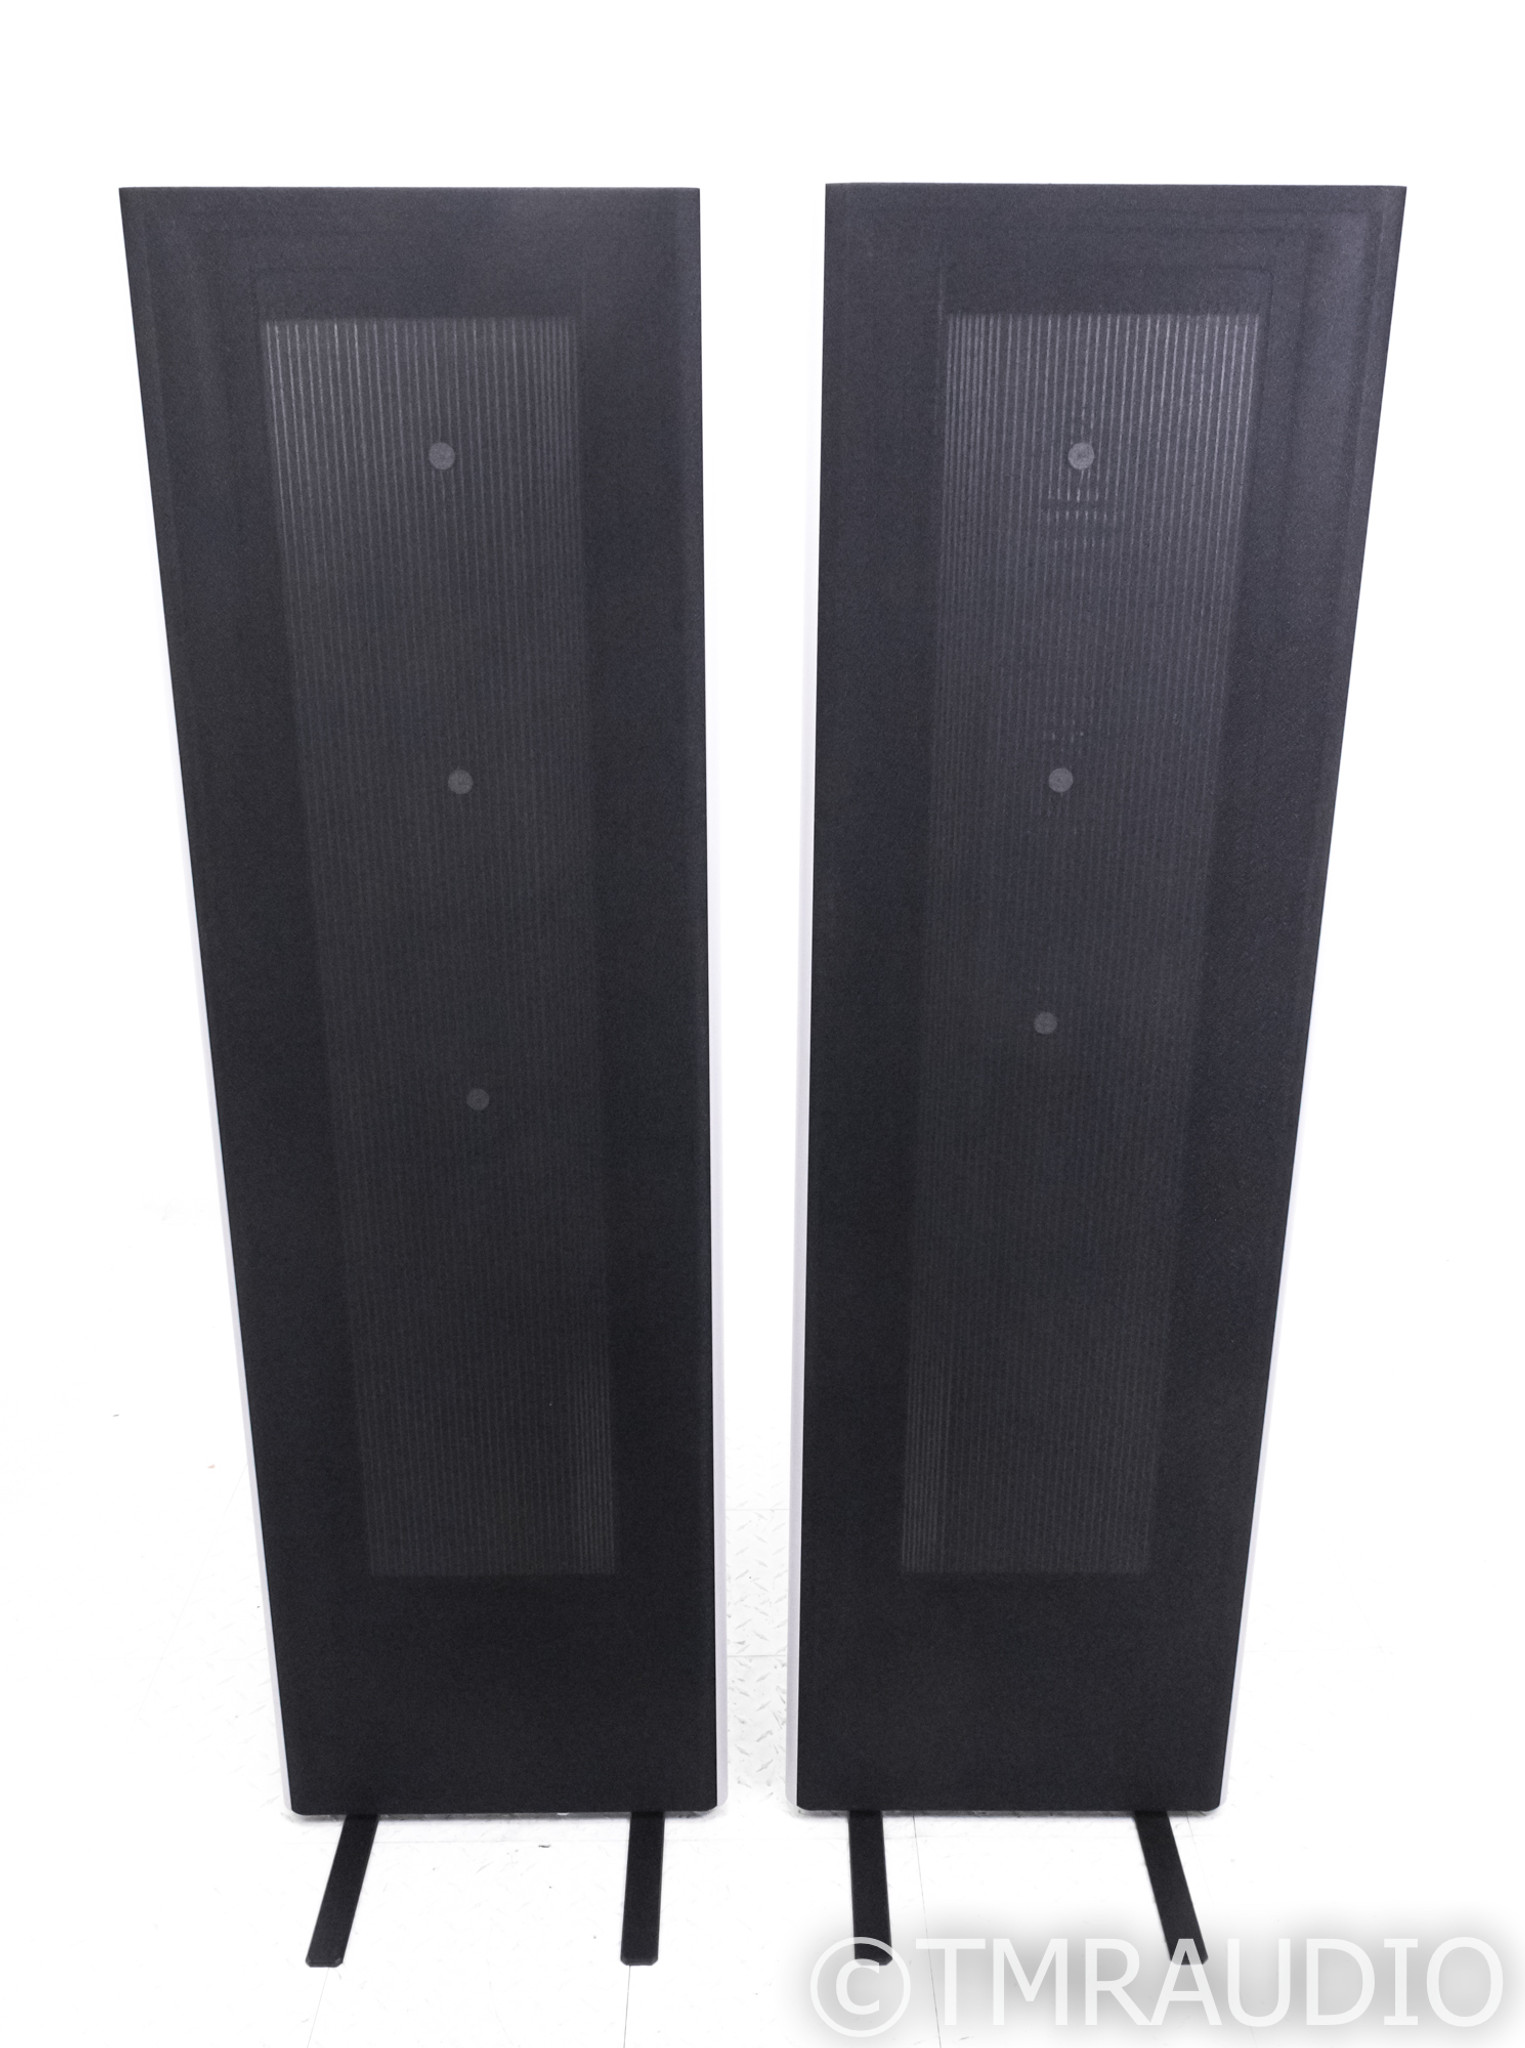 magnepan 1.7 speakers